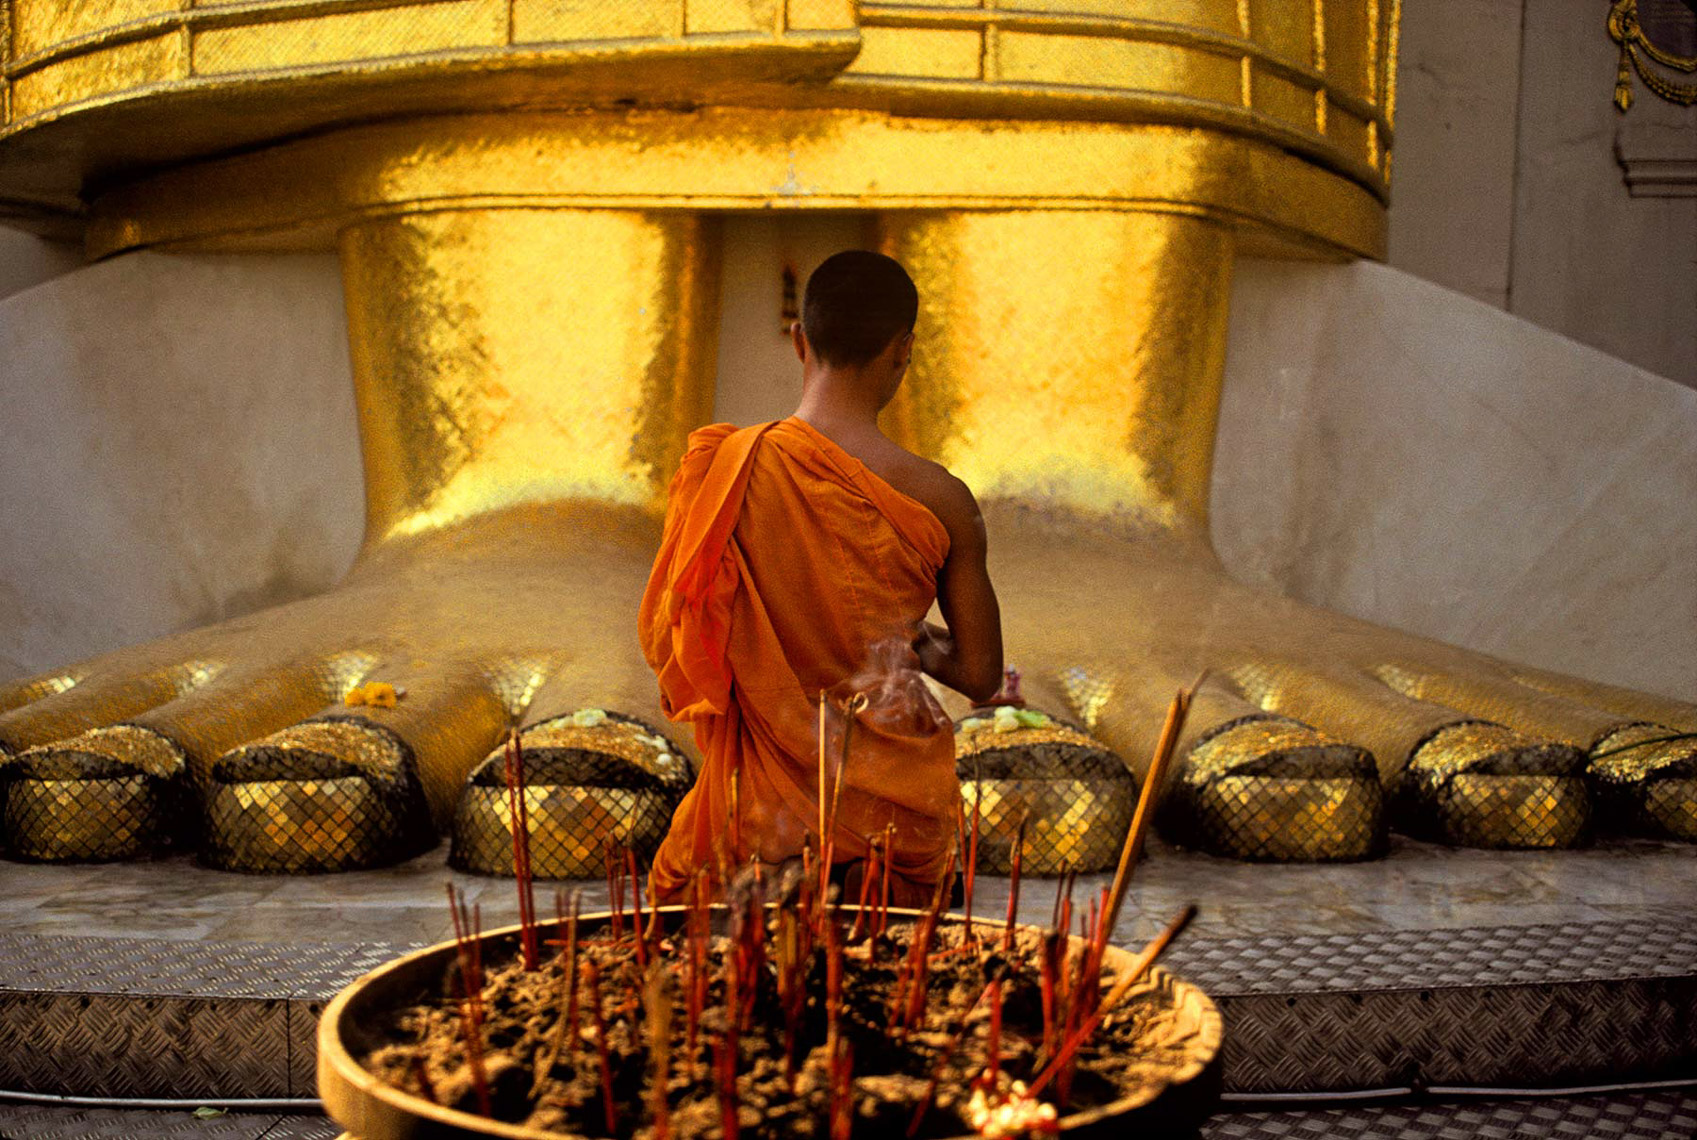 043-Monk-feet-of-Buddha